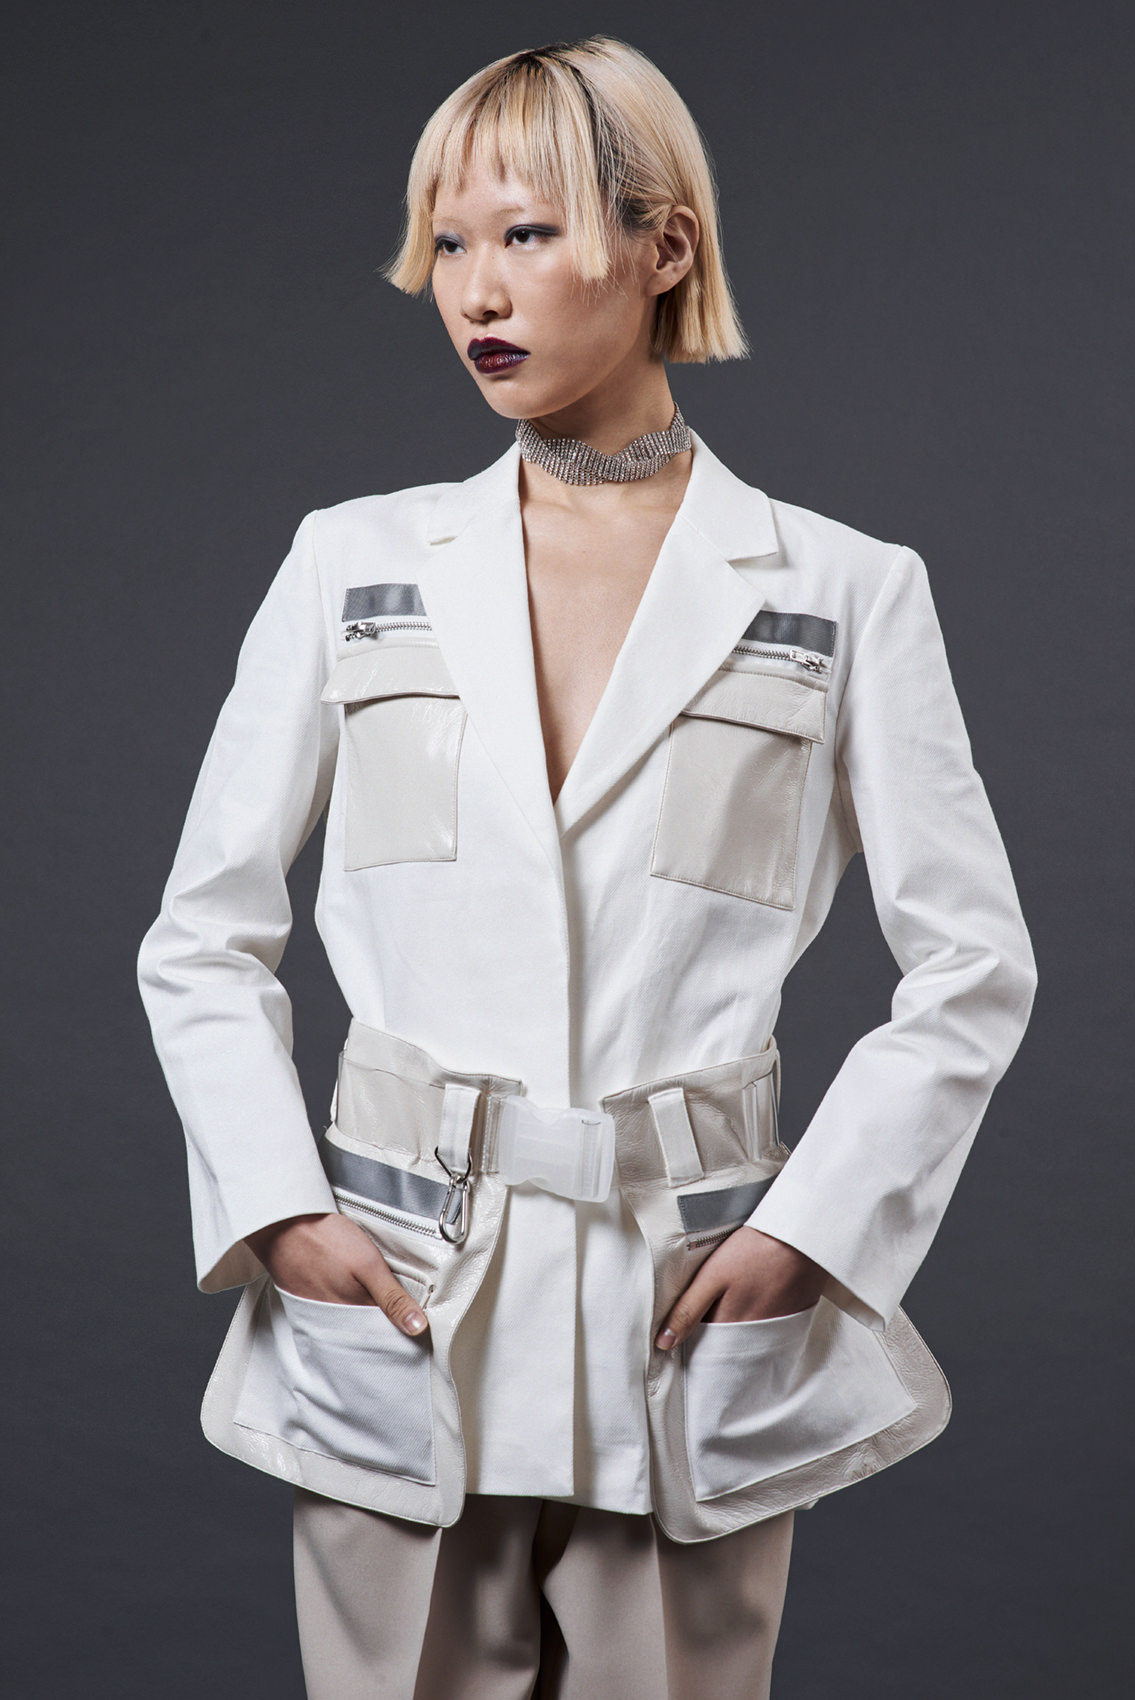 Honglin Li in white jacket